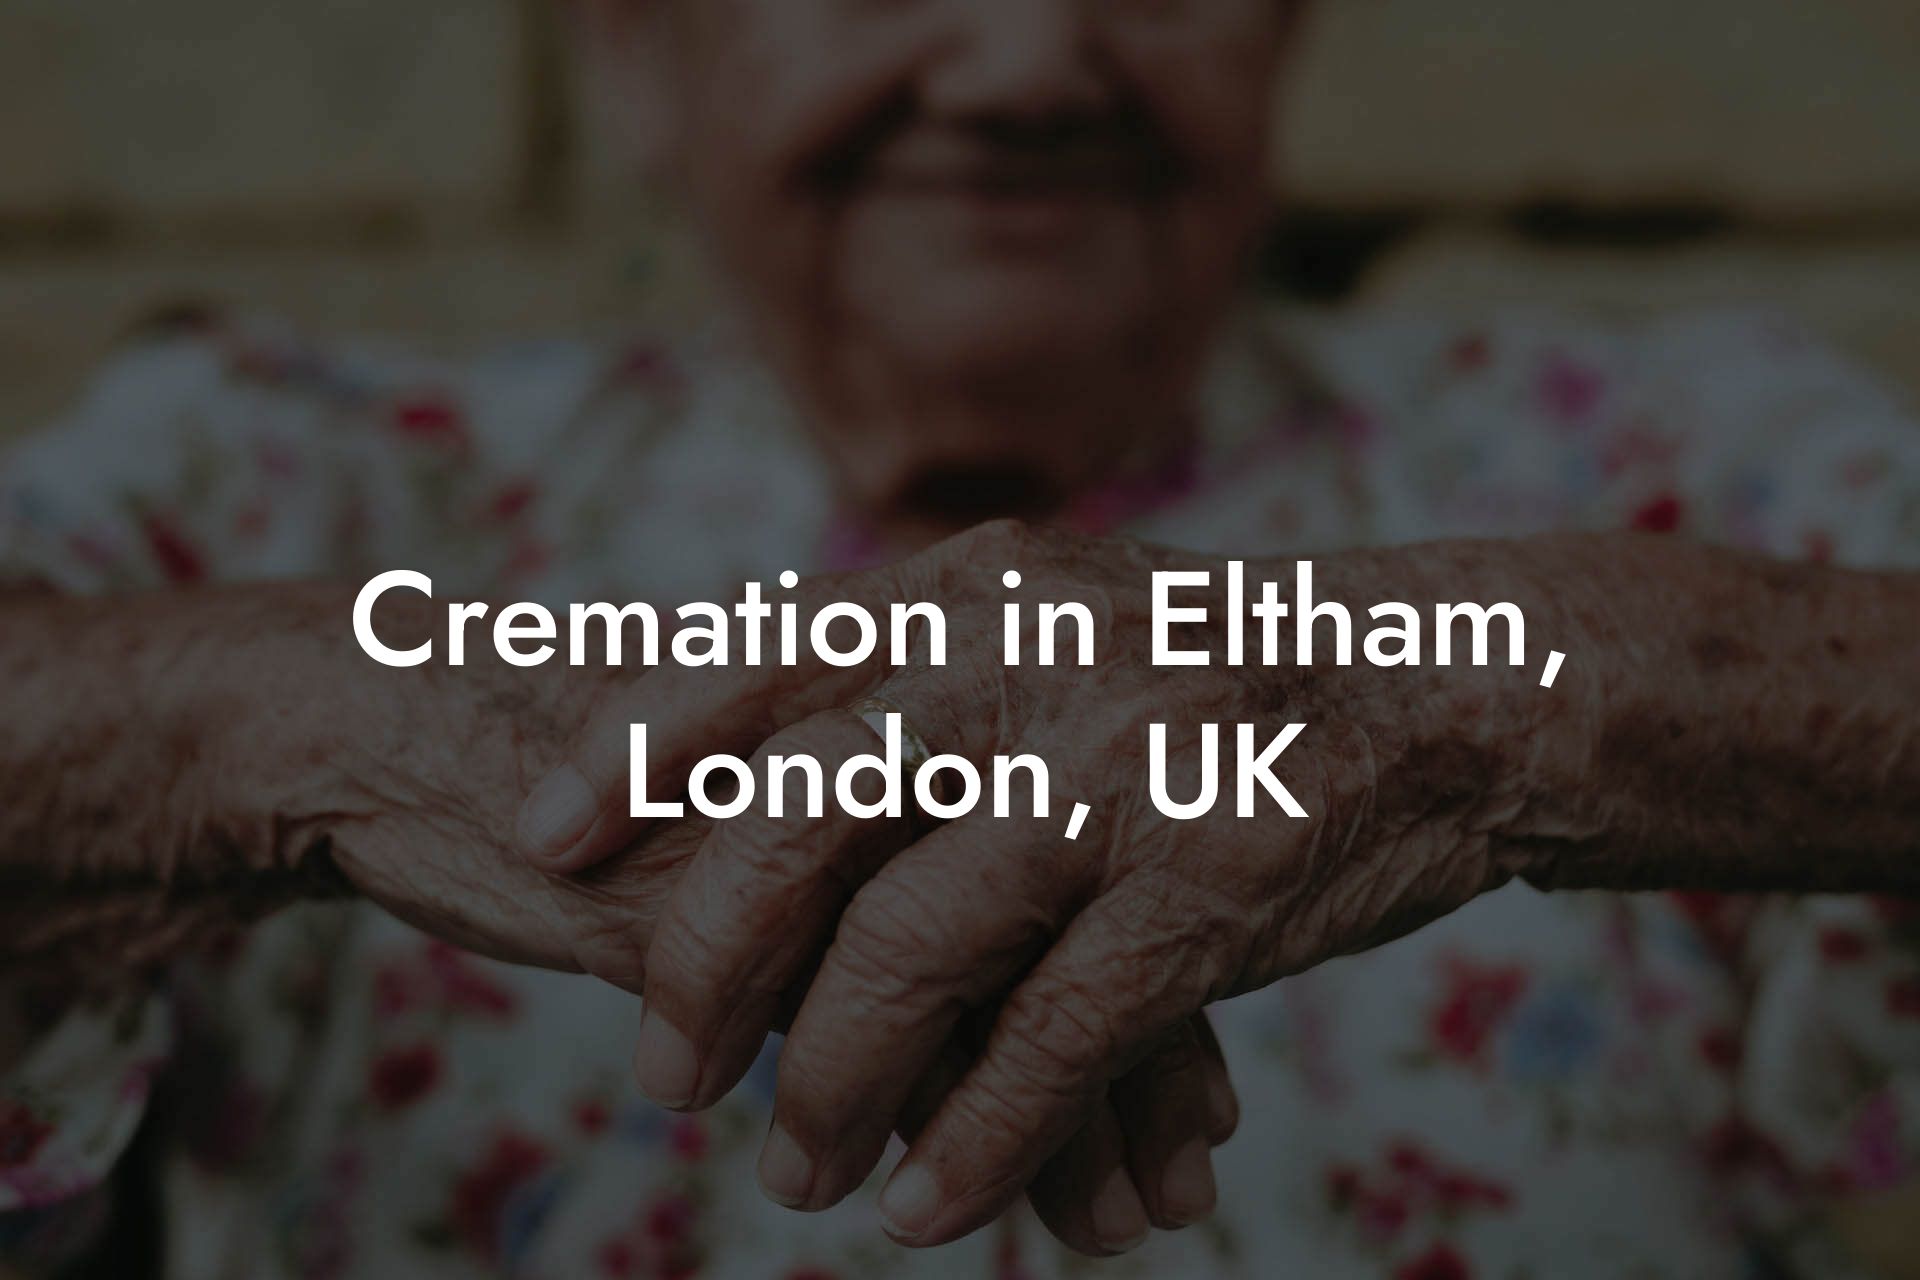 Cremation in Eltham, London, UK